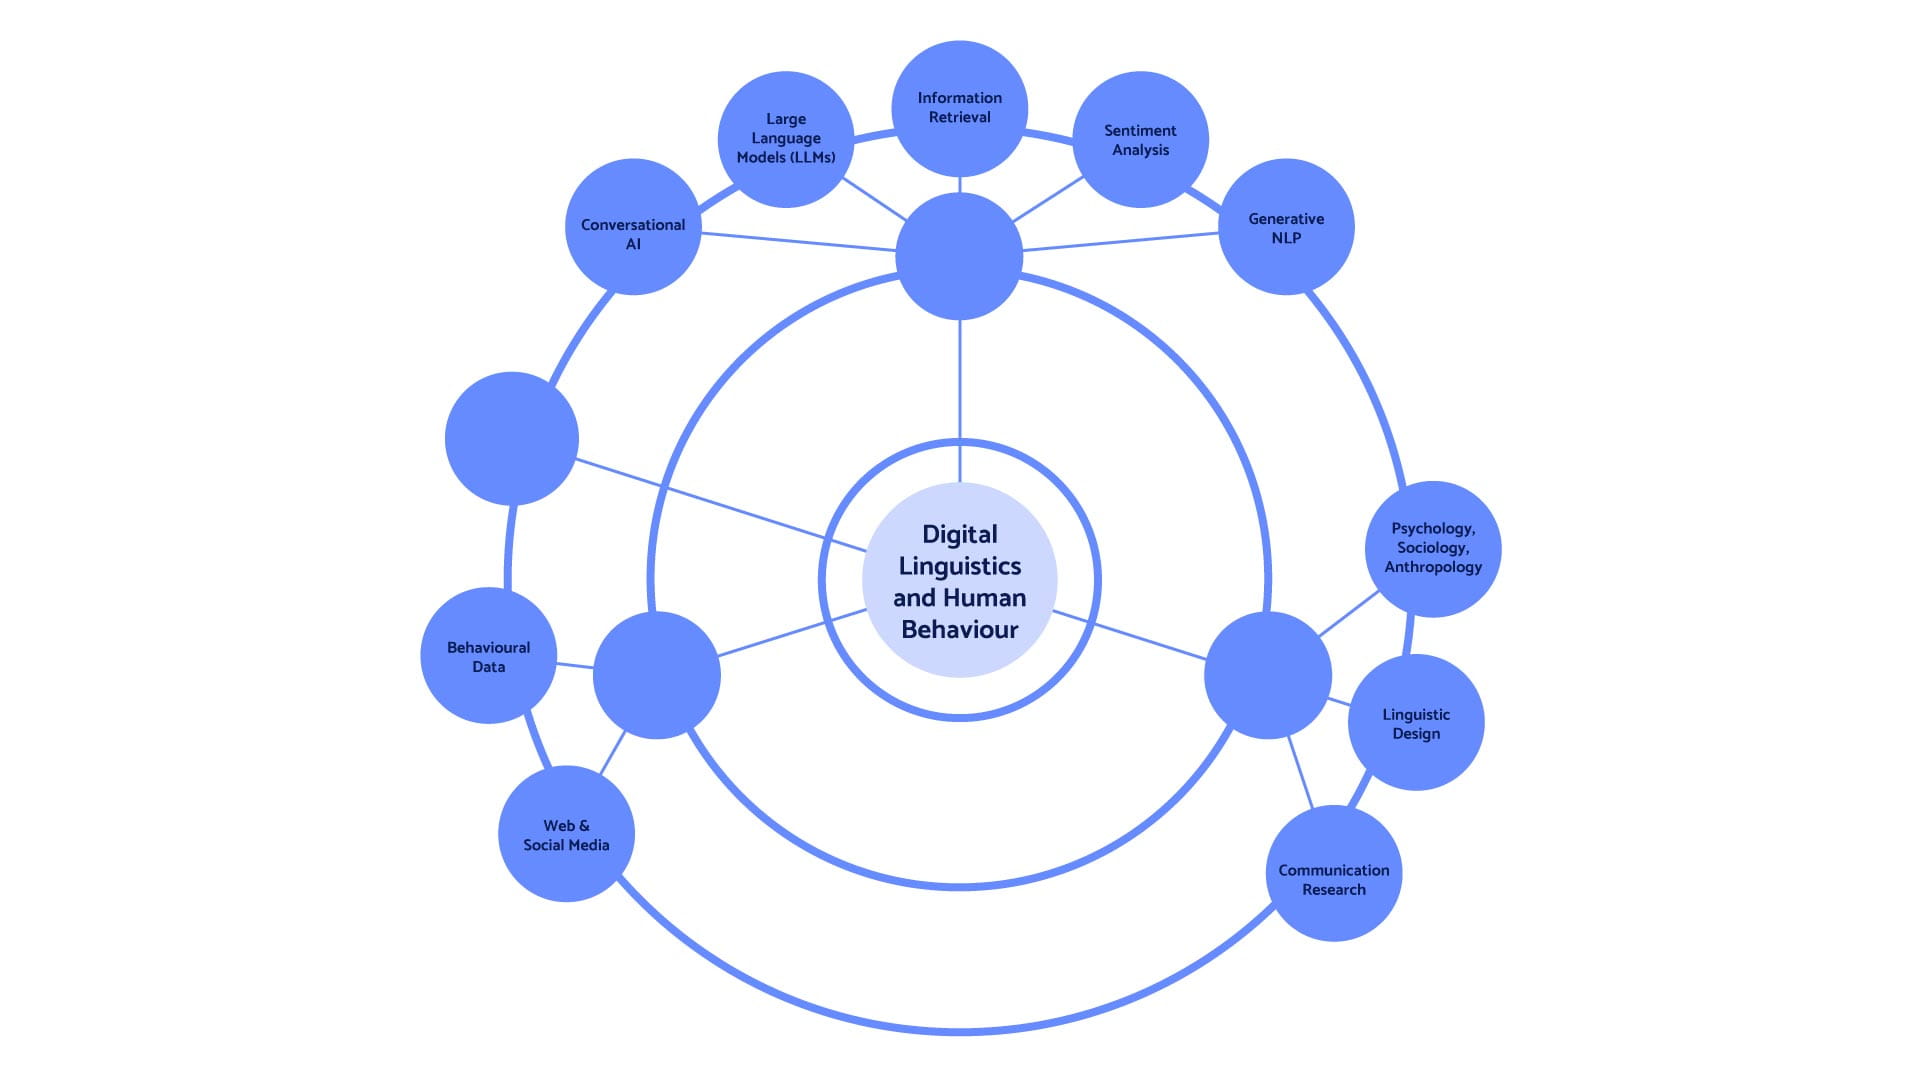 Ecosistema delle tecnologie di Digital Linguistics & Human Behaviour